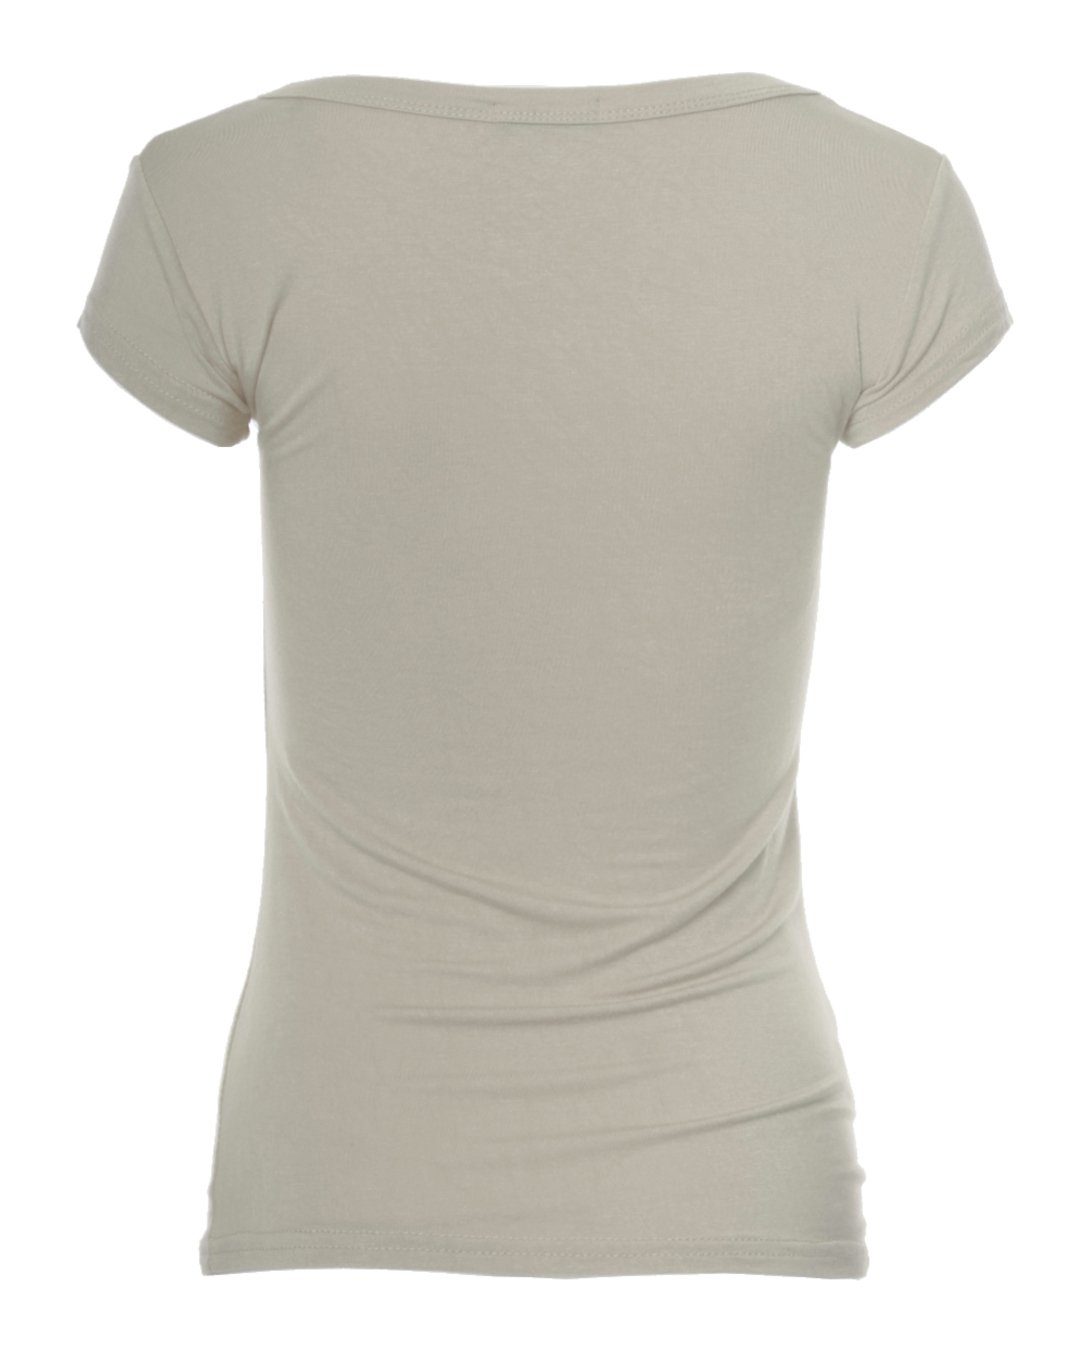 Muse T-Shirt Skinny Basic taupe Kurzarm Fit T-Shirt 1001